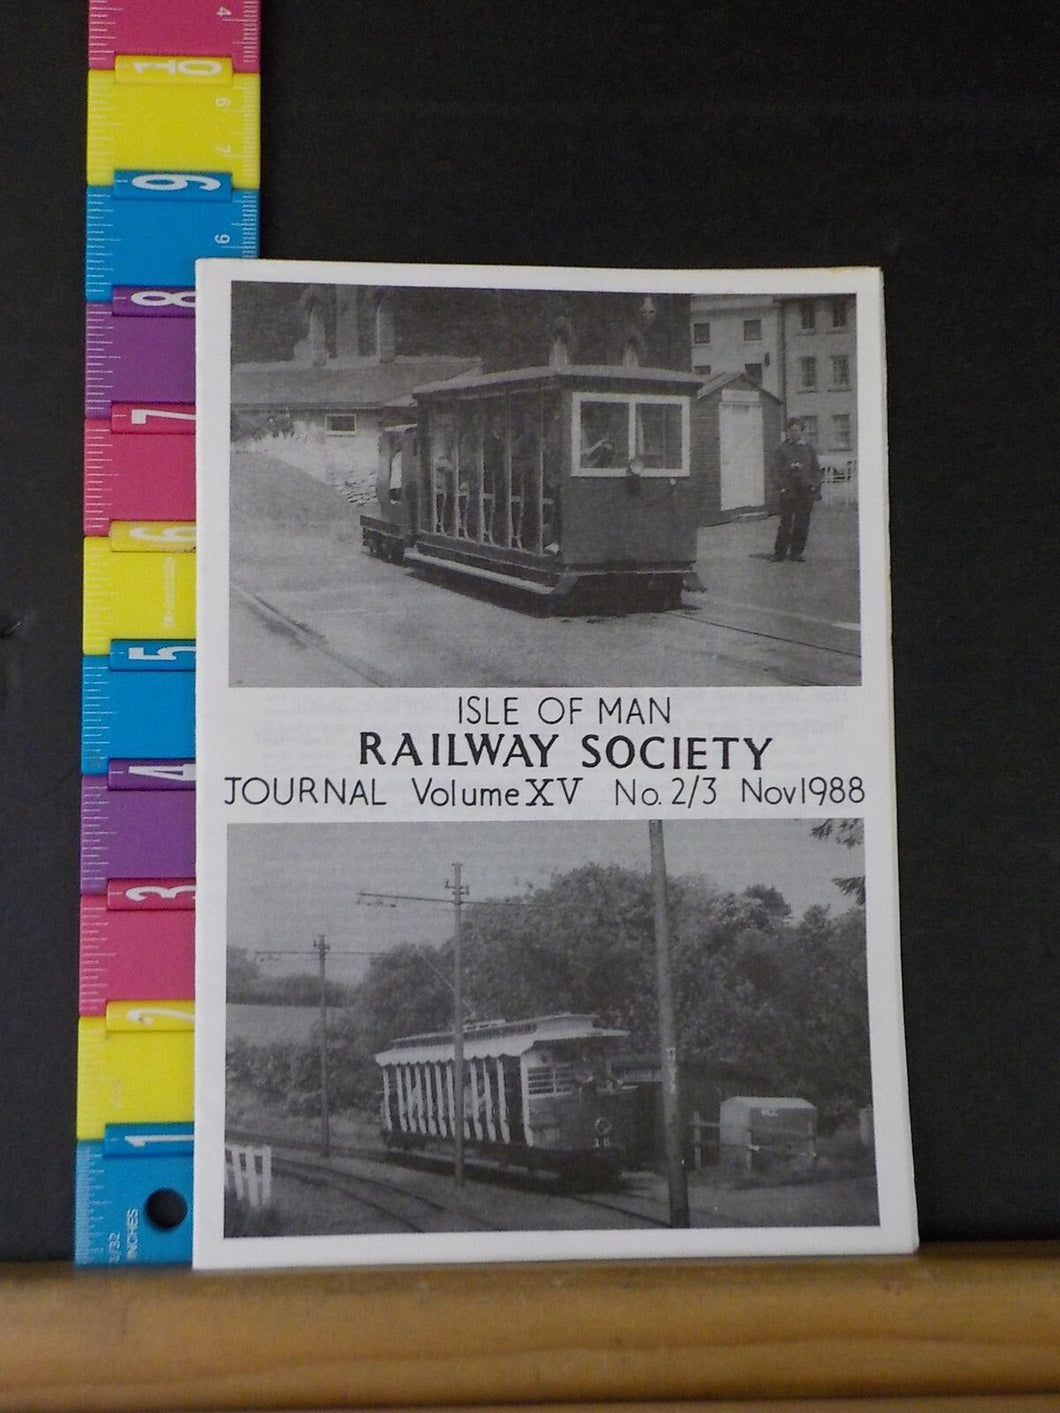 Isle of Man Railway Society Journal 1988 November Volume XV No. 2/3